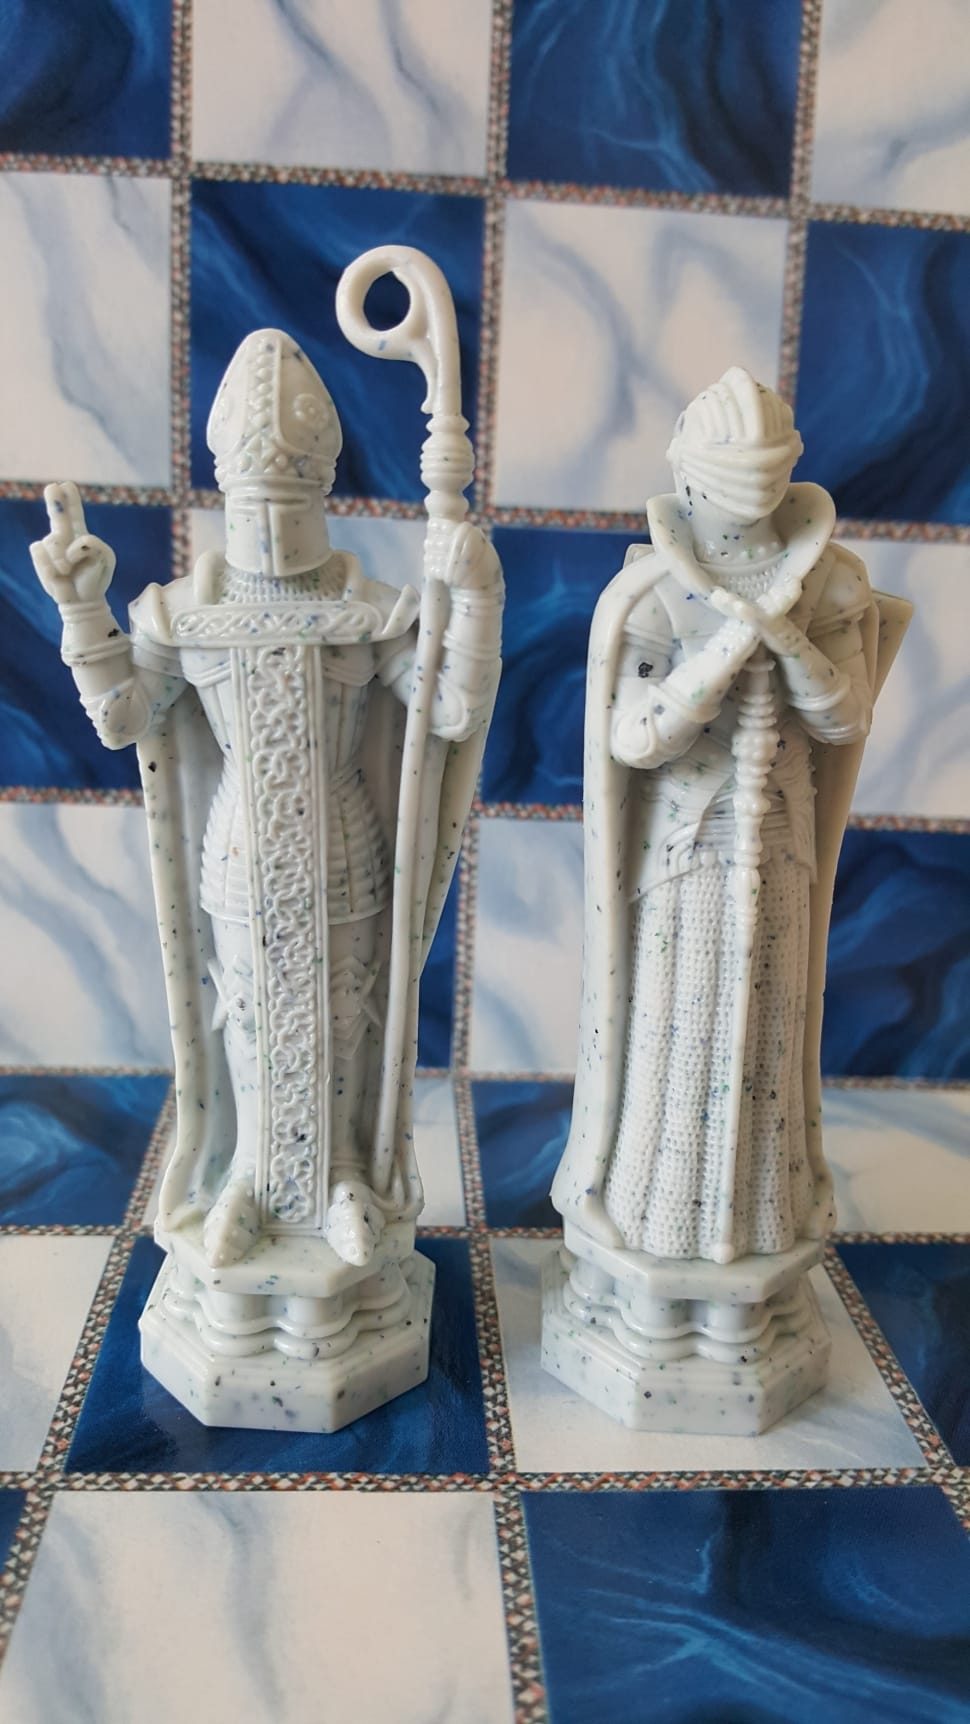 2 white and blue ceramic priest figurine preview